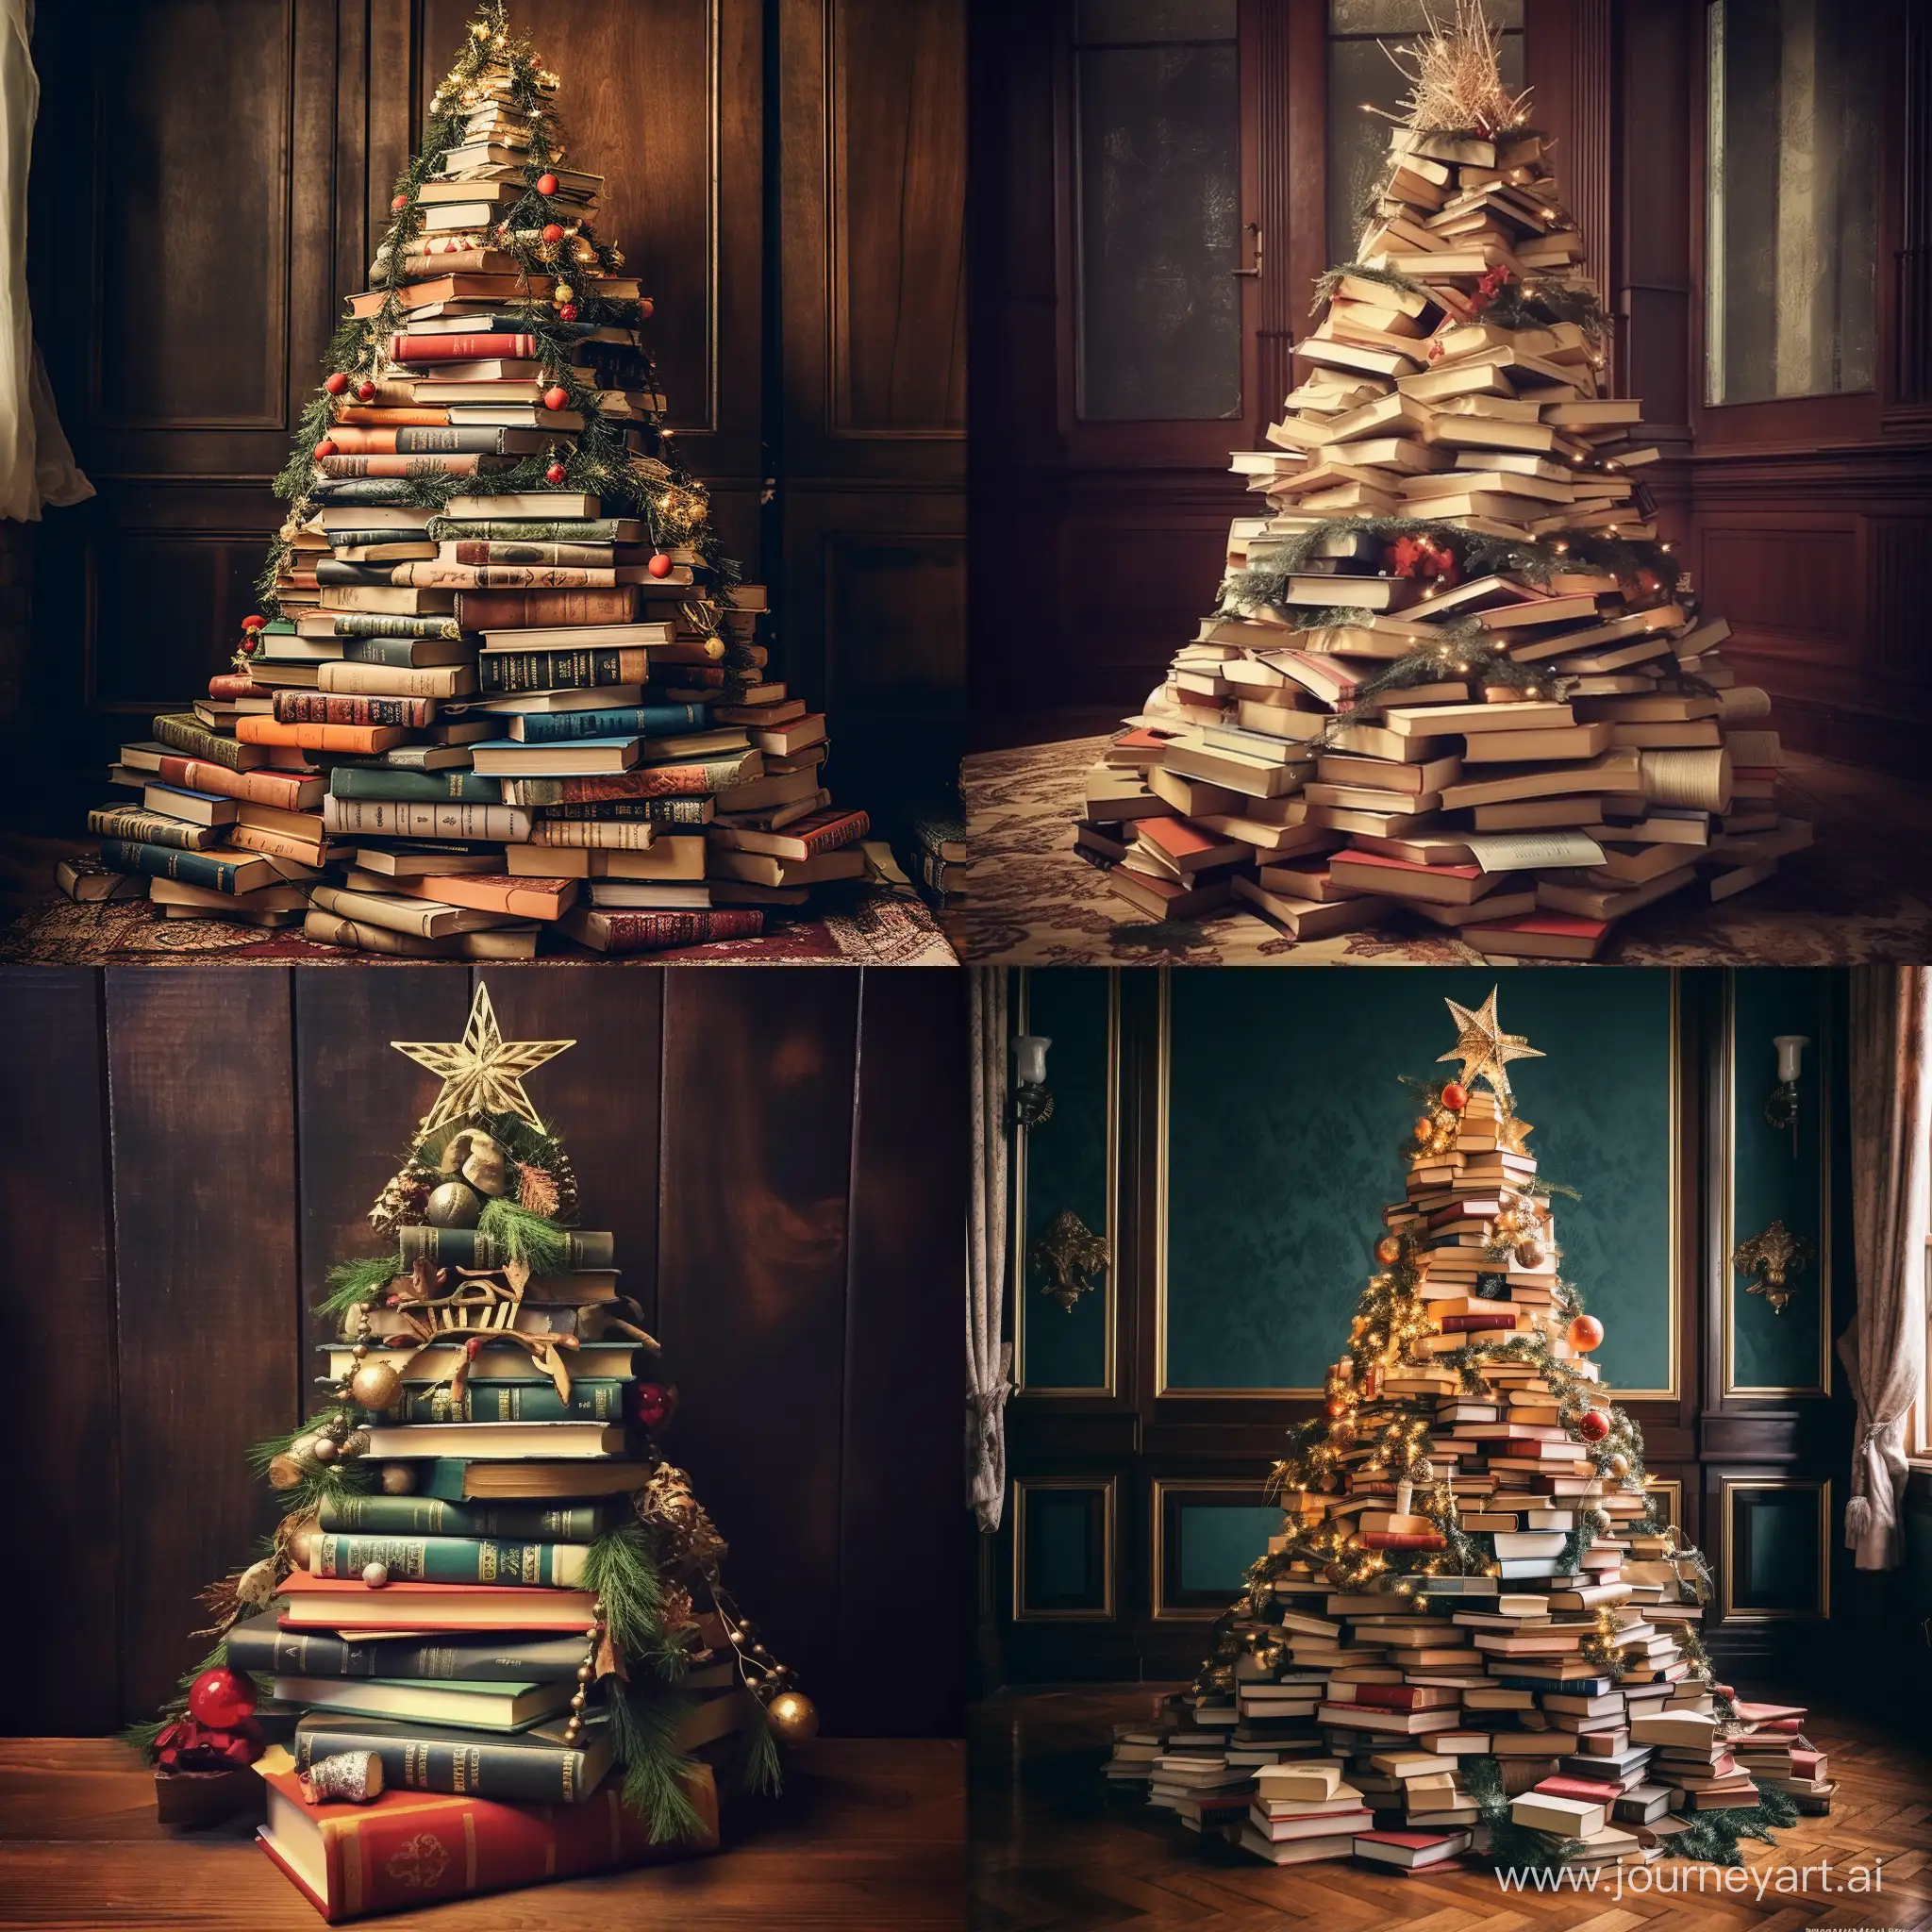 Festive-Christmas-Tree-Made-of-Books-Unique-Holiday-Decor